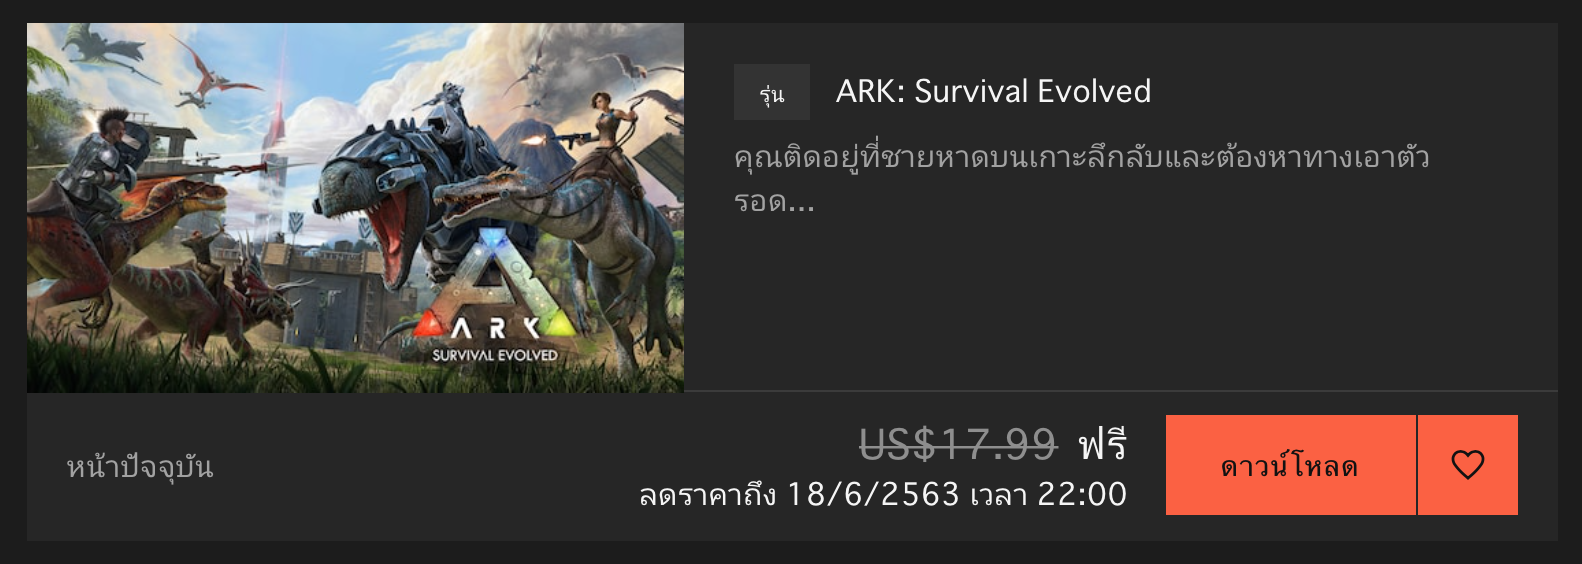 Ark evolved сколько весит. Сколько весит АРК сурвайвал. Сколько весит АРК СУРВАЙВЛ. Ark Survival Evolved Epic games сколько весет. Сколько весит АРК сурыаил.